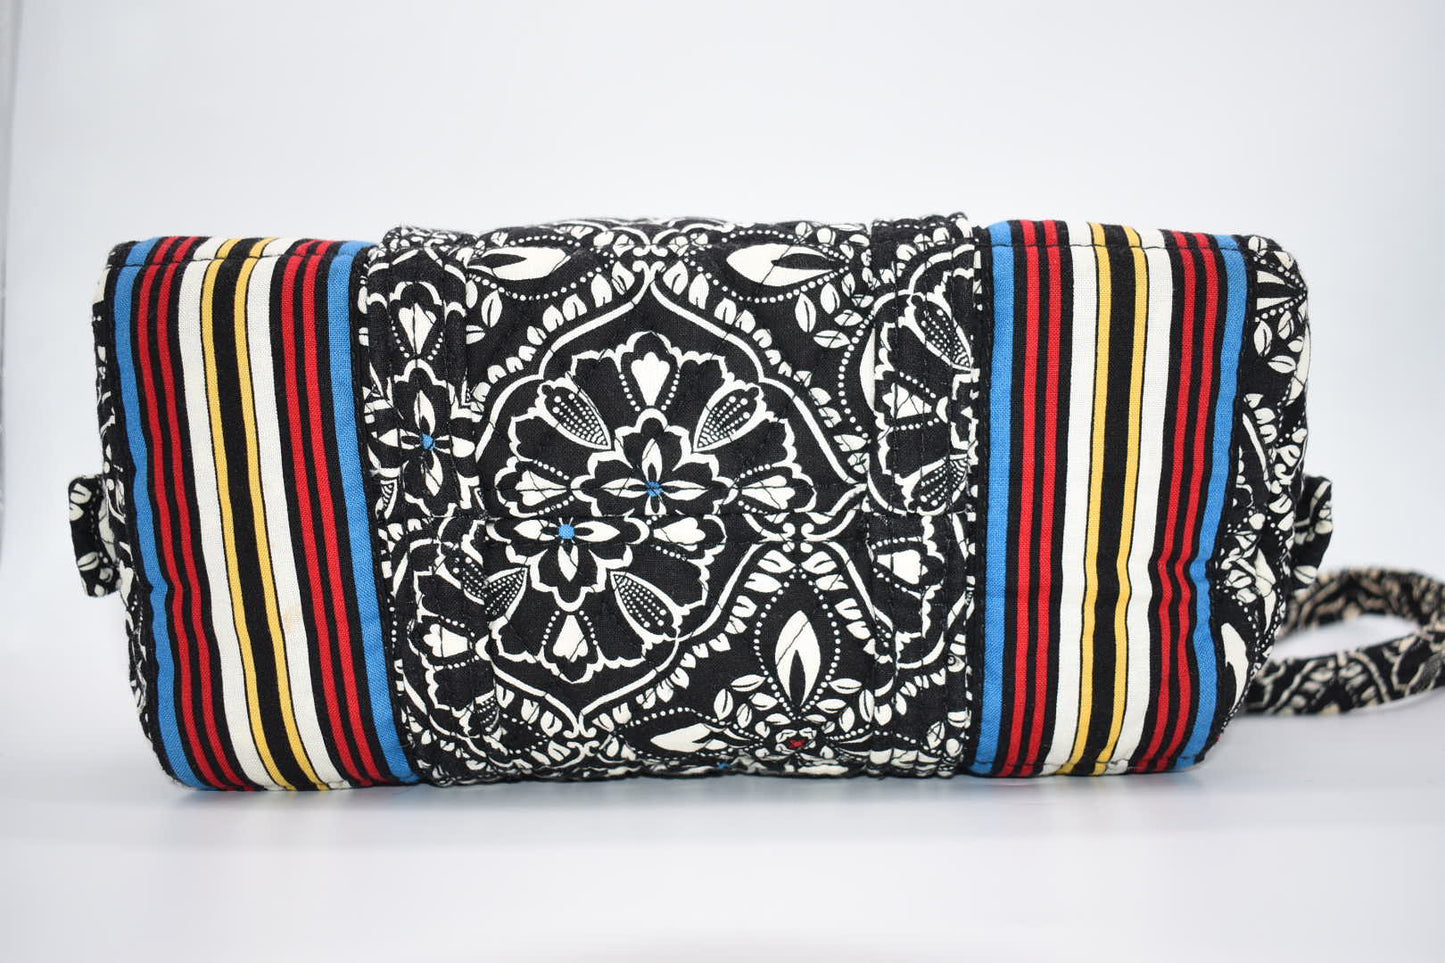 Vera Bradley 100 Handbag/ Shoulder Bag in "Barcelona" Pattern